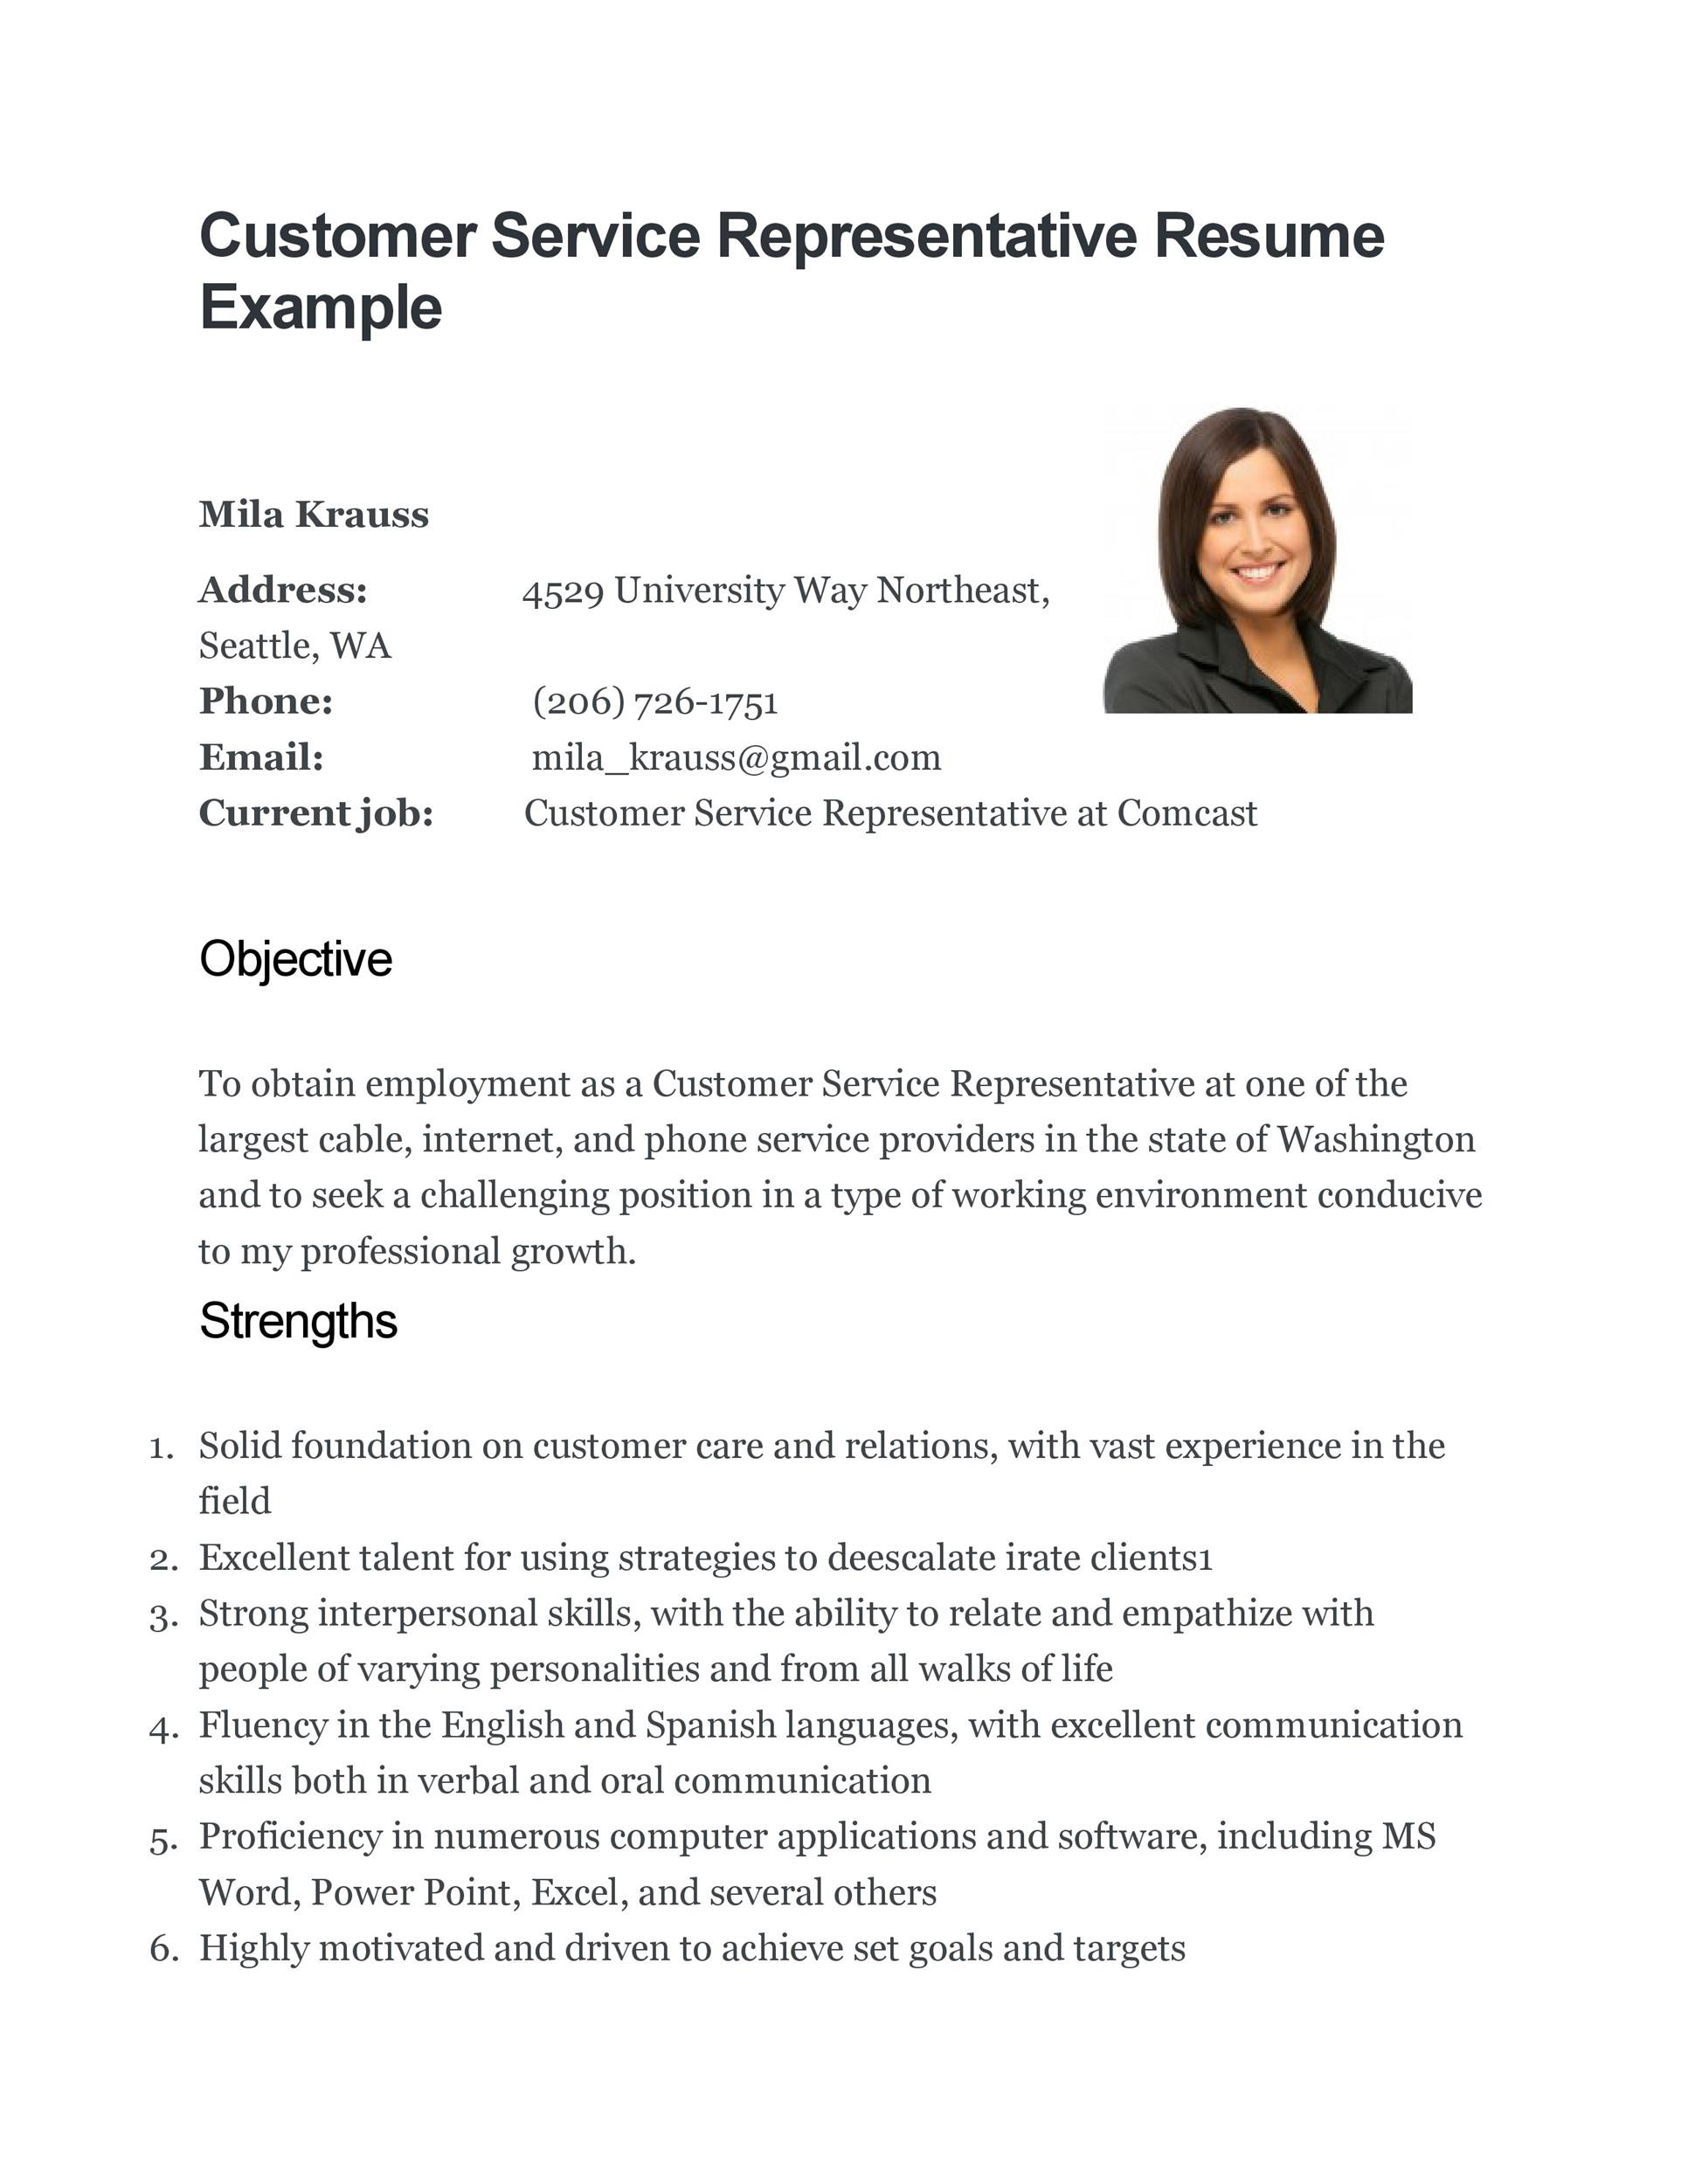 Resume Template for Customer Service Representative Free Resume Writing Help Templates Customers Service; Free Resume …